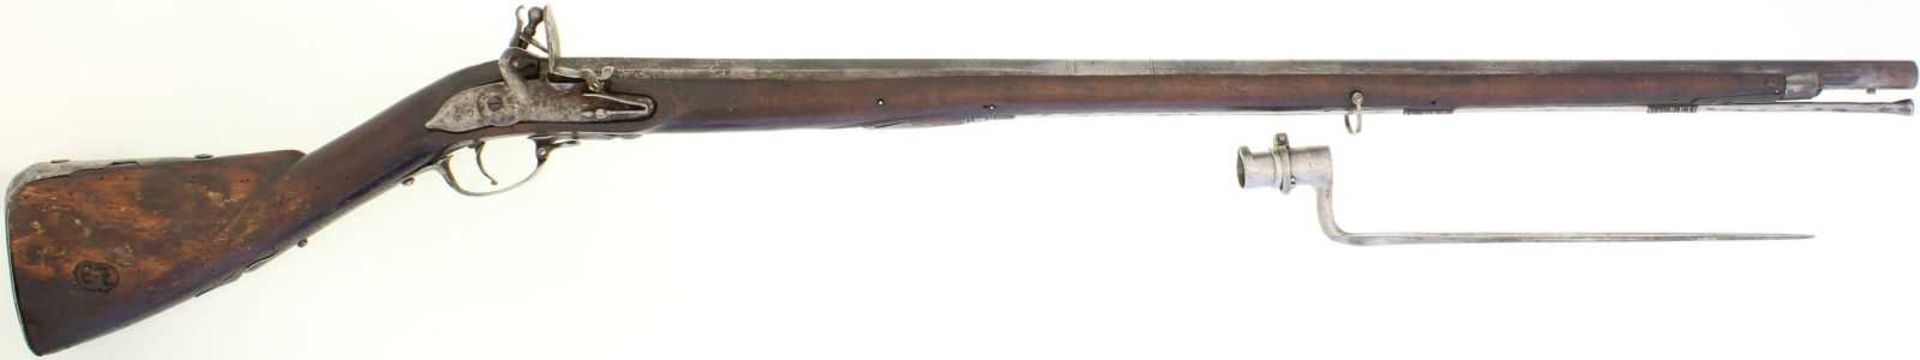 Steinschlossgewehr, Kanton Bern, um 1750, Kal. 18mm LL 995mm, TL 1365mm, Rundlauf, hinterer